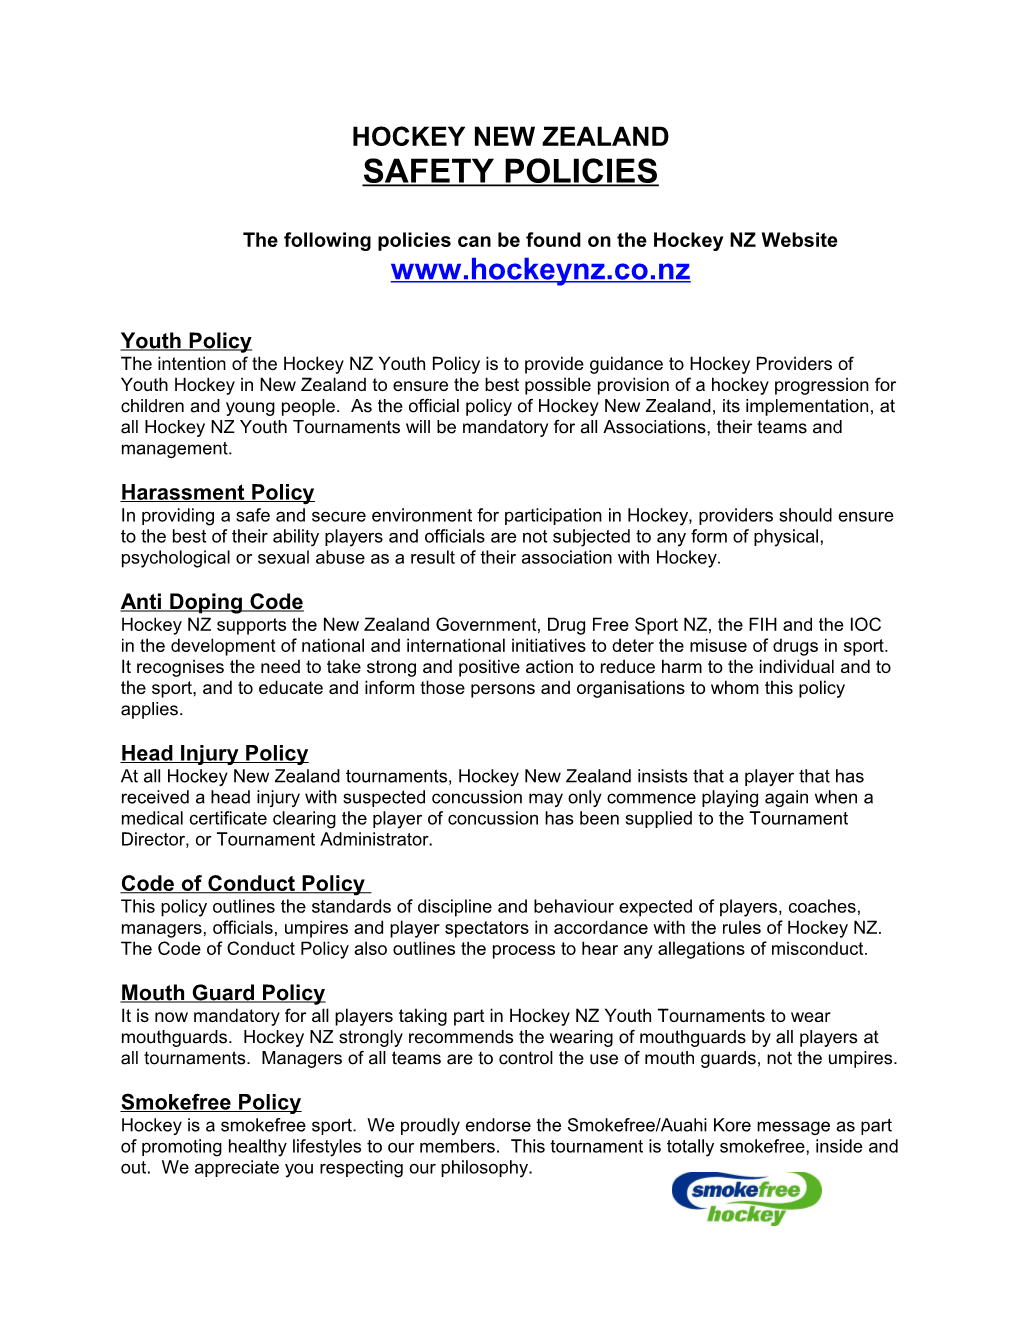 New Zealand Hockey Federation Safety Policies